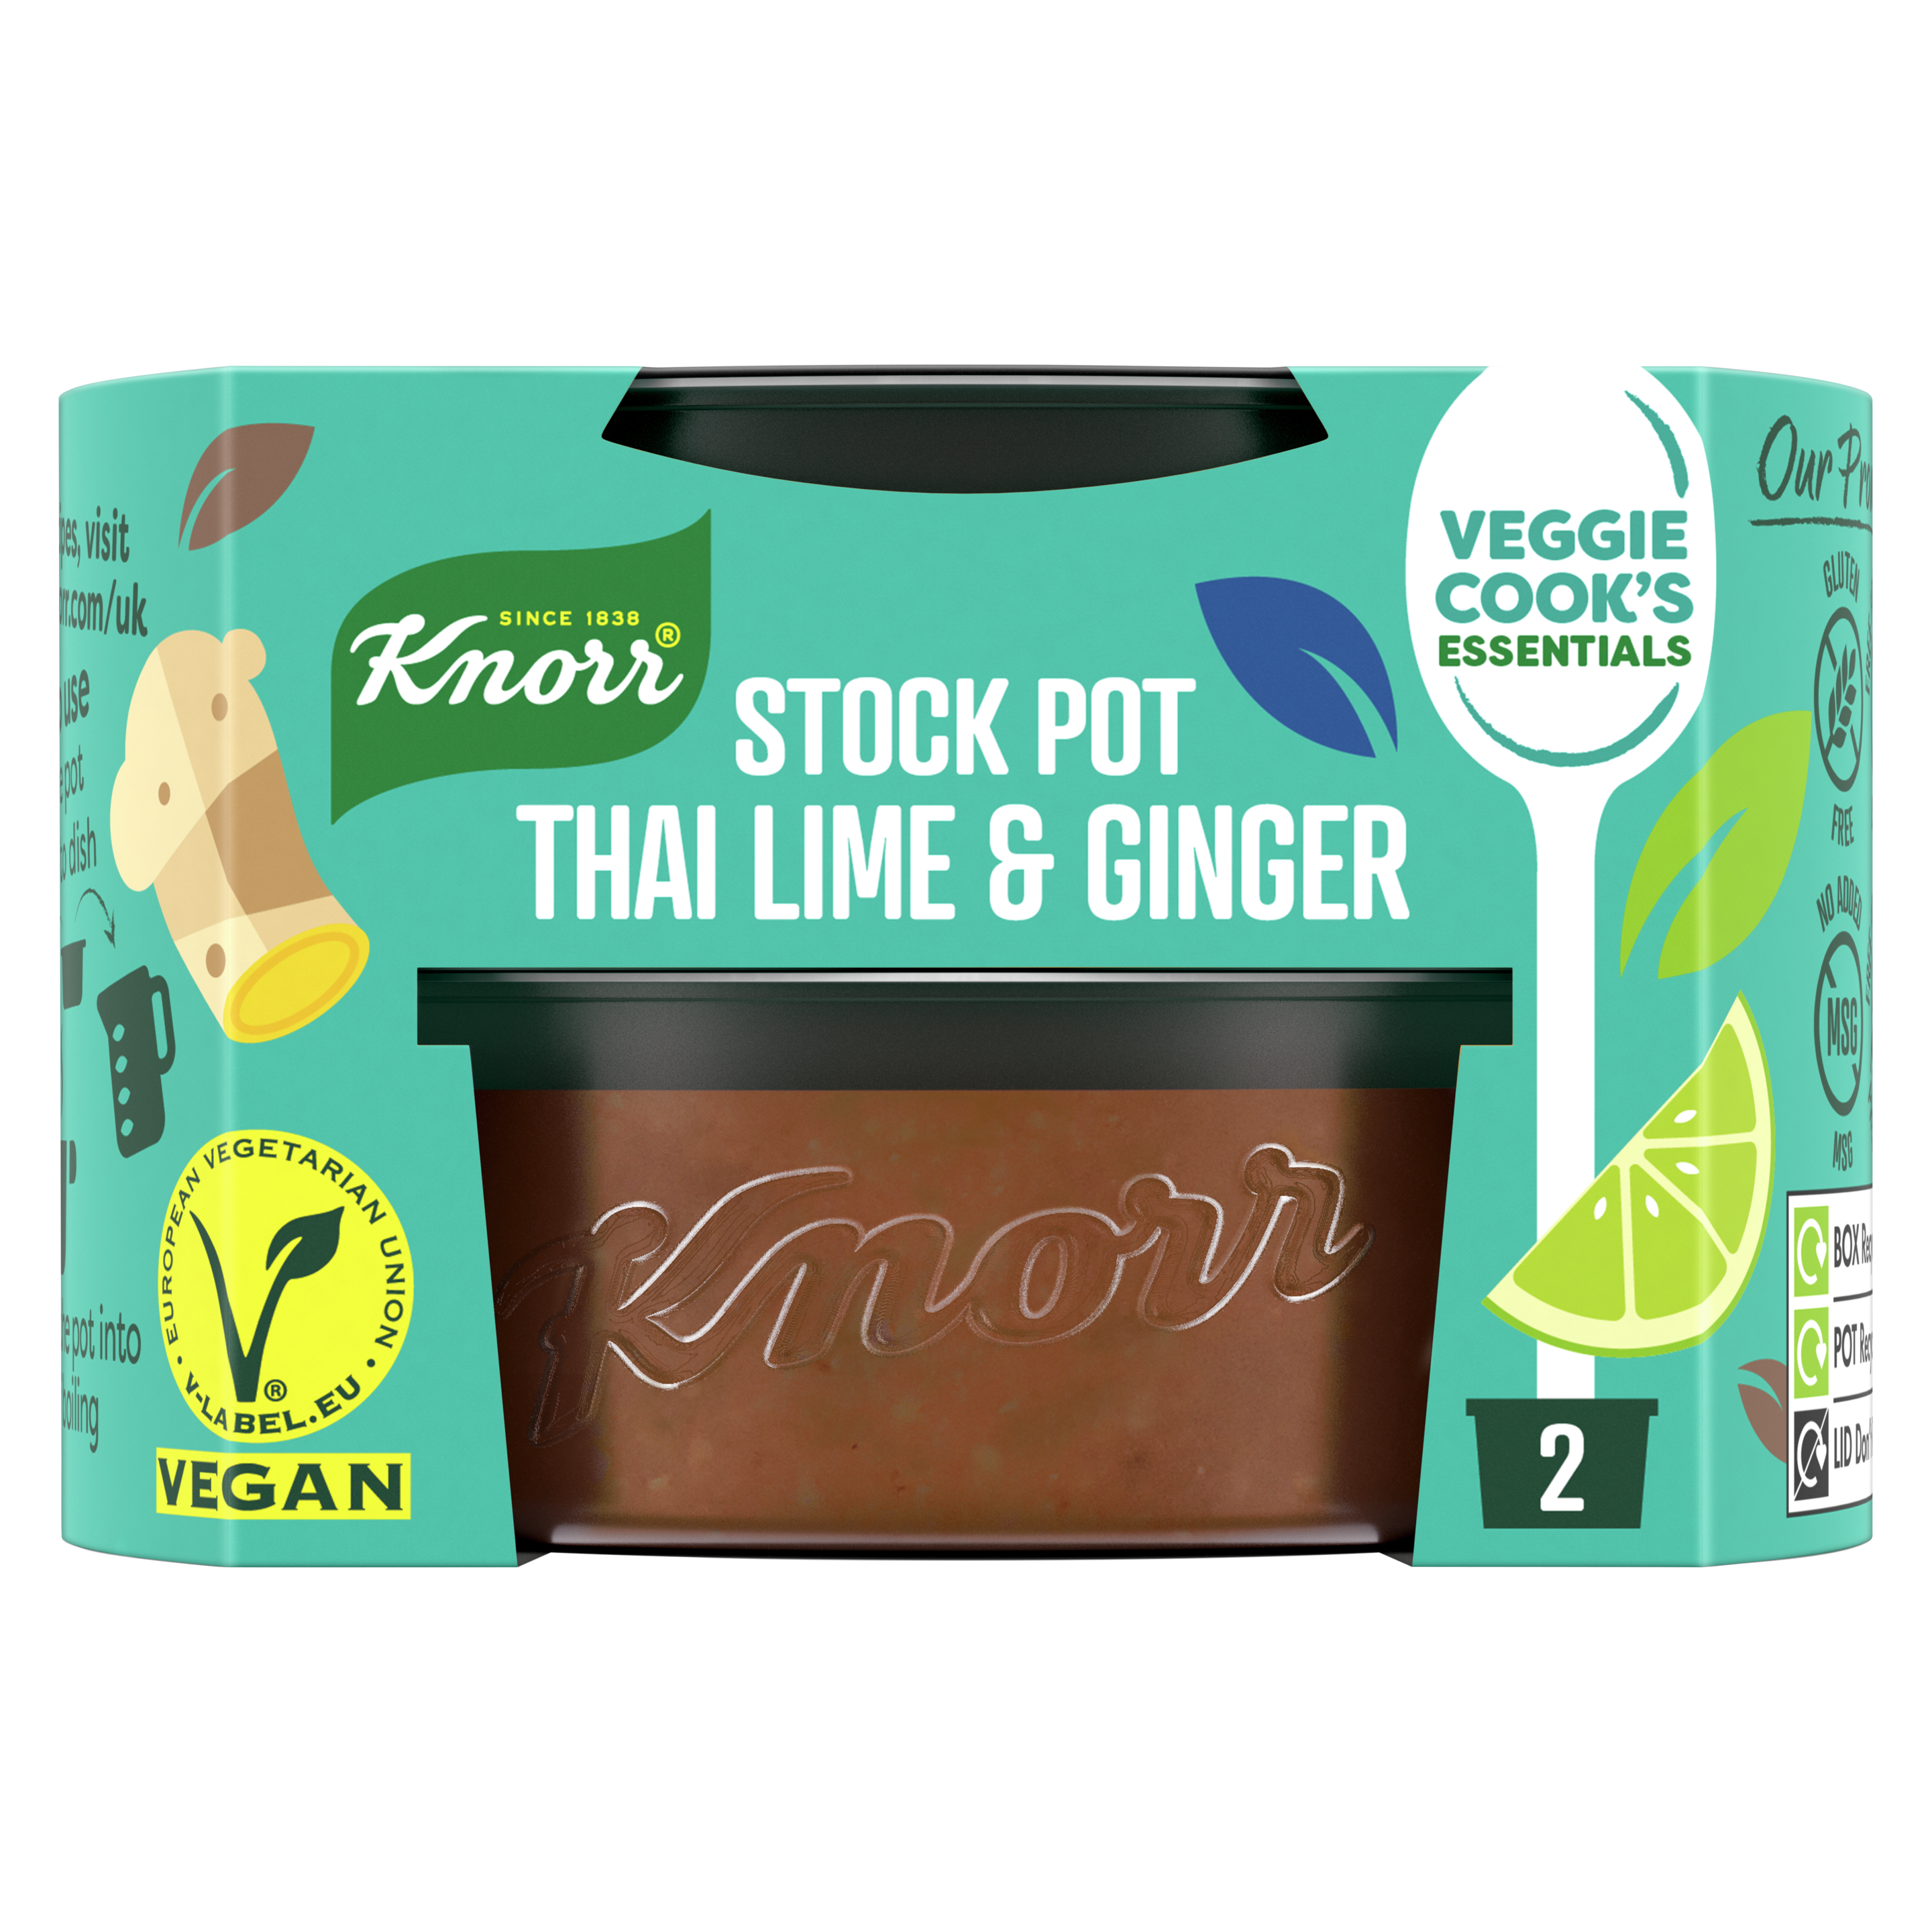 Kaffir Lime & Ginger Stock Pot